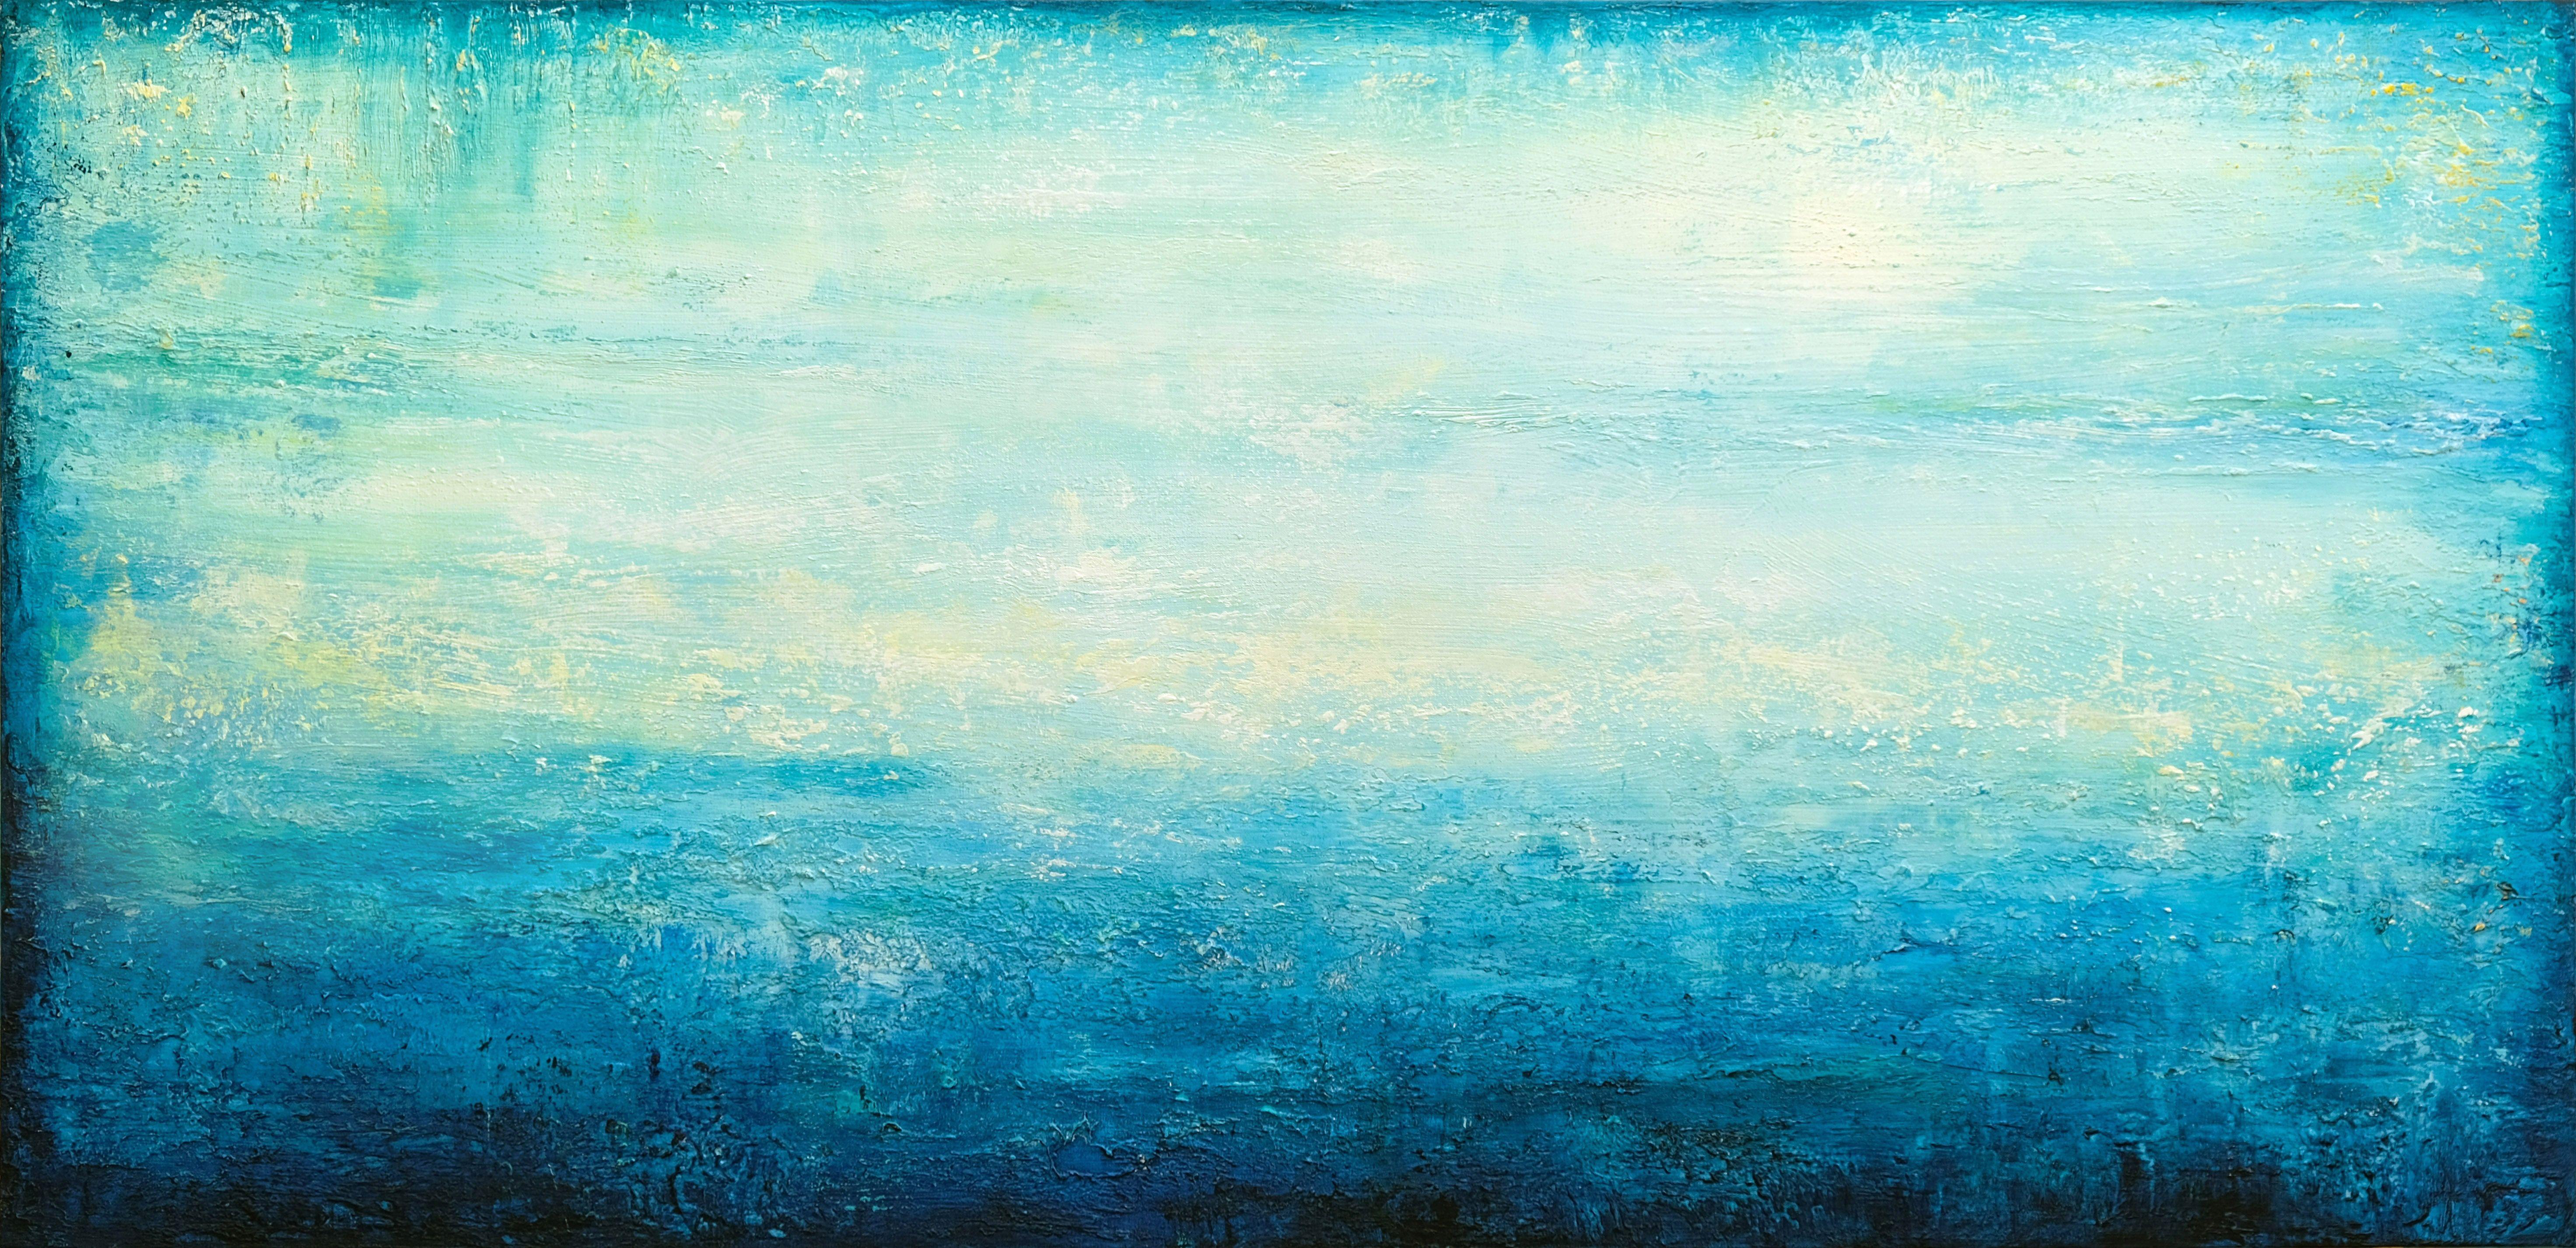 Behshad Arjomandi Abstract Painting - Turquoise Landscape IX, Painting, Acrylic on Canvas